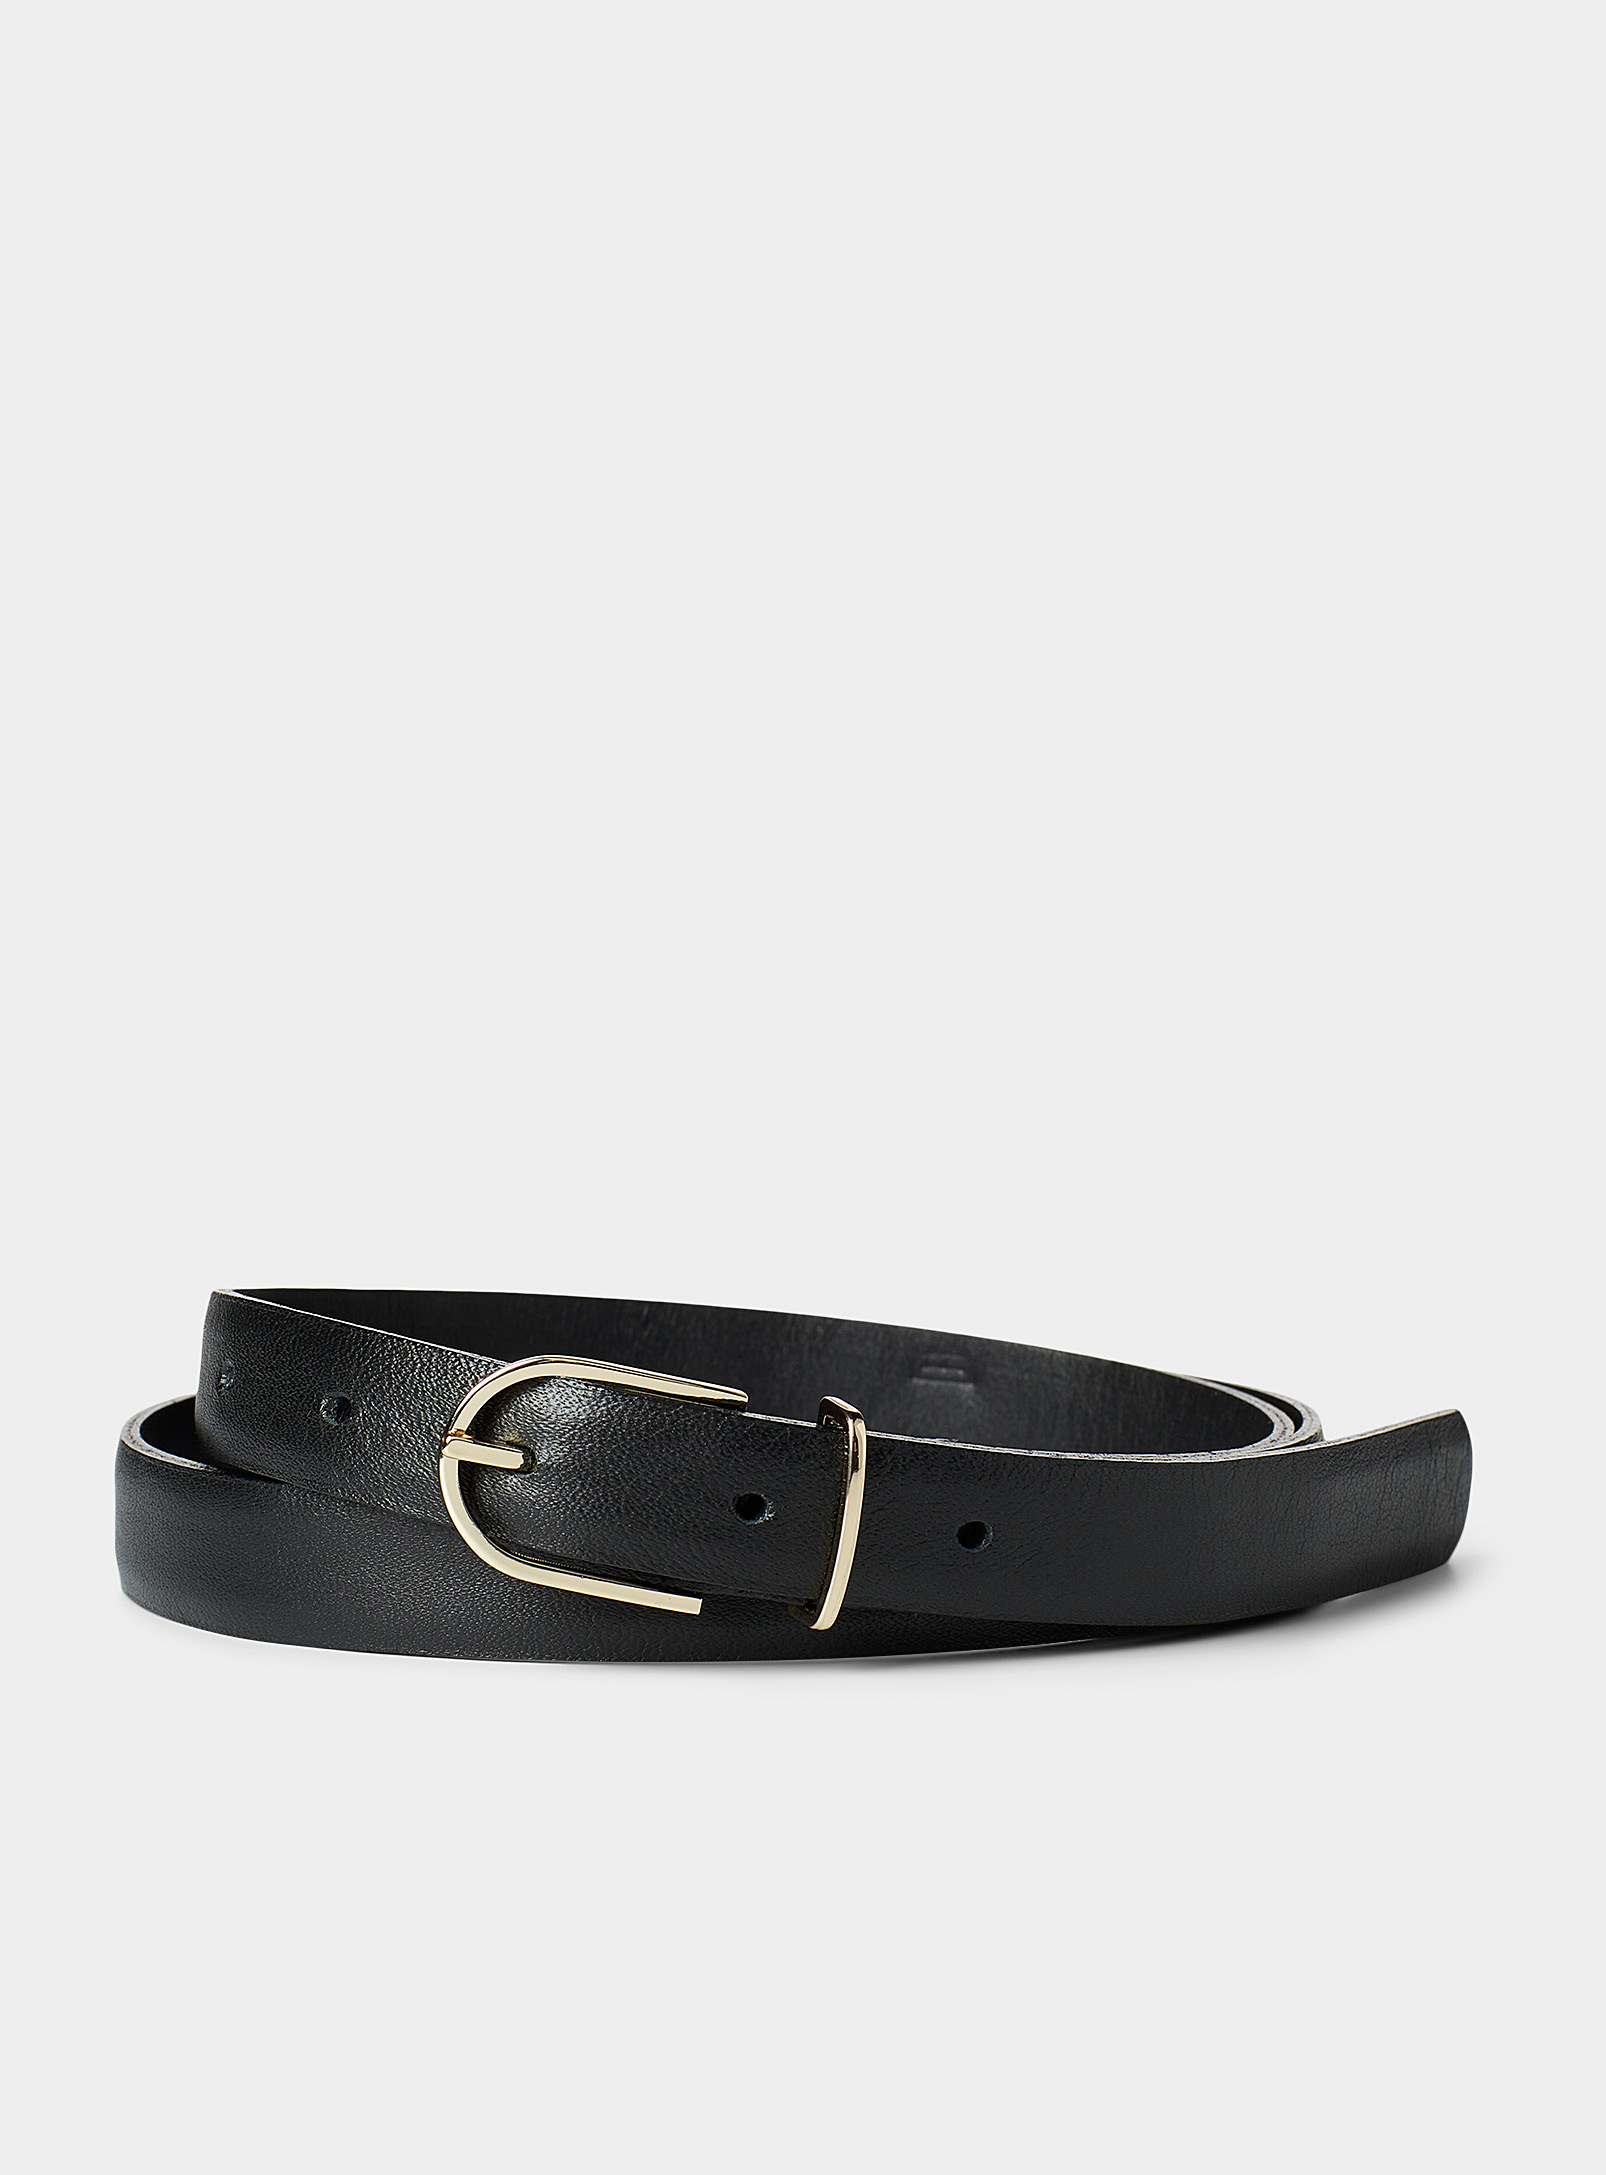 Simons - Women's Thin D-ring mini-buckle belt